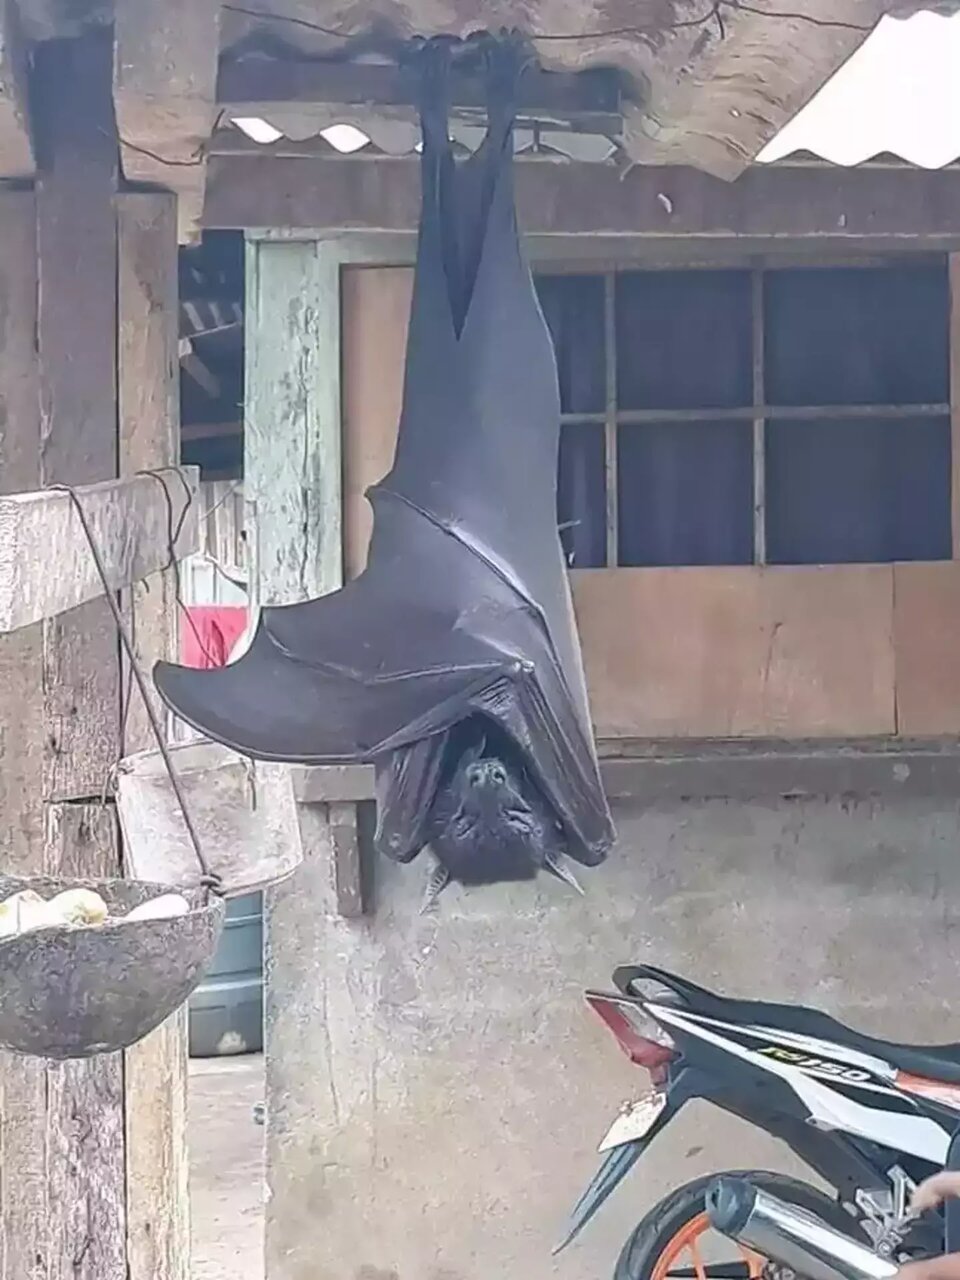 اسرار خفاش غول‌پیکر | ببینید